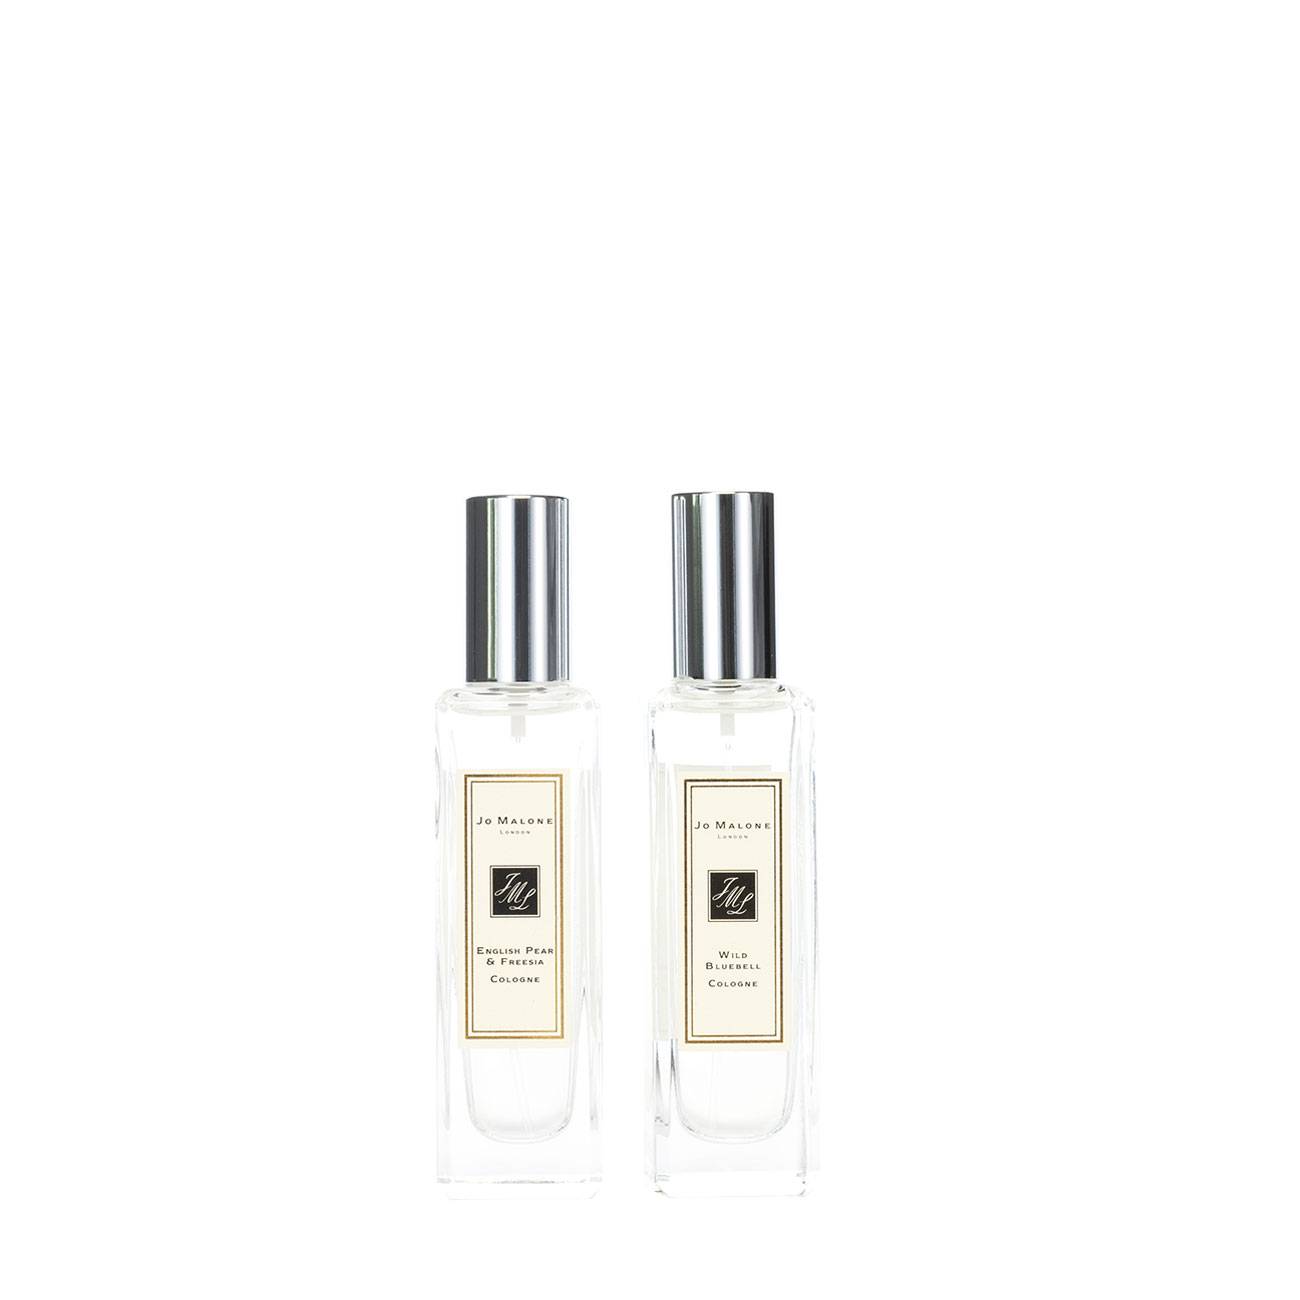 Parfum de niche Jo Malone London FRAGRANCE COMBINING DUO SET 60ml cu comanda online